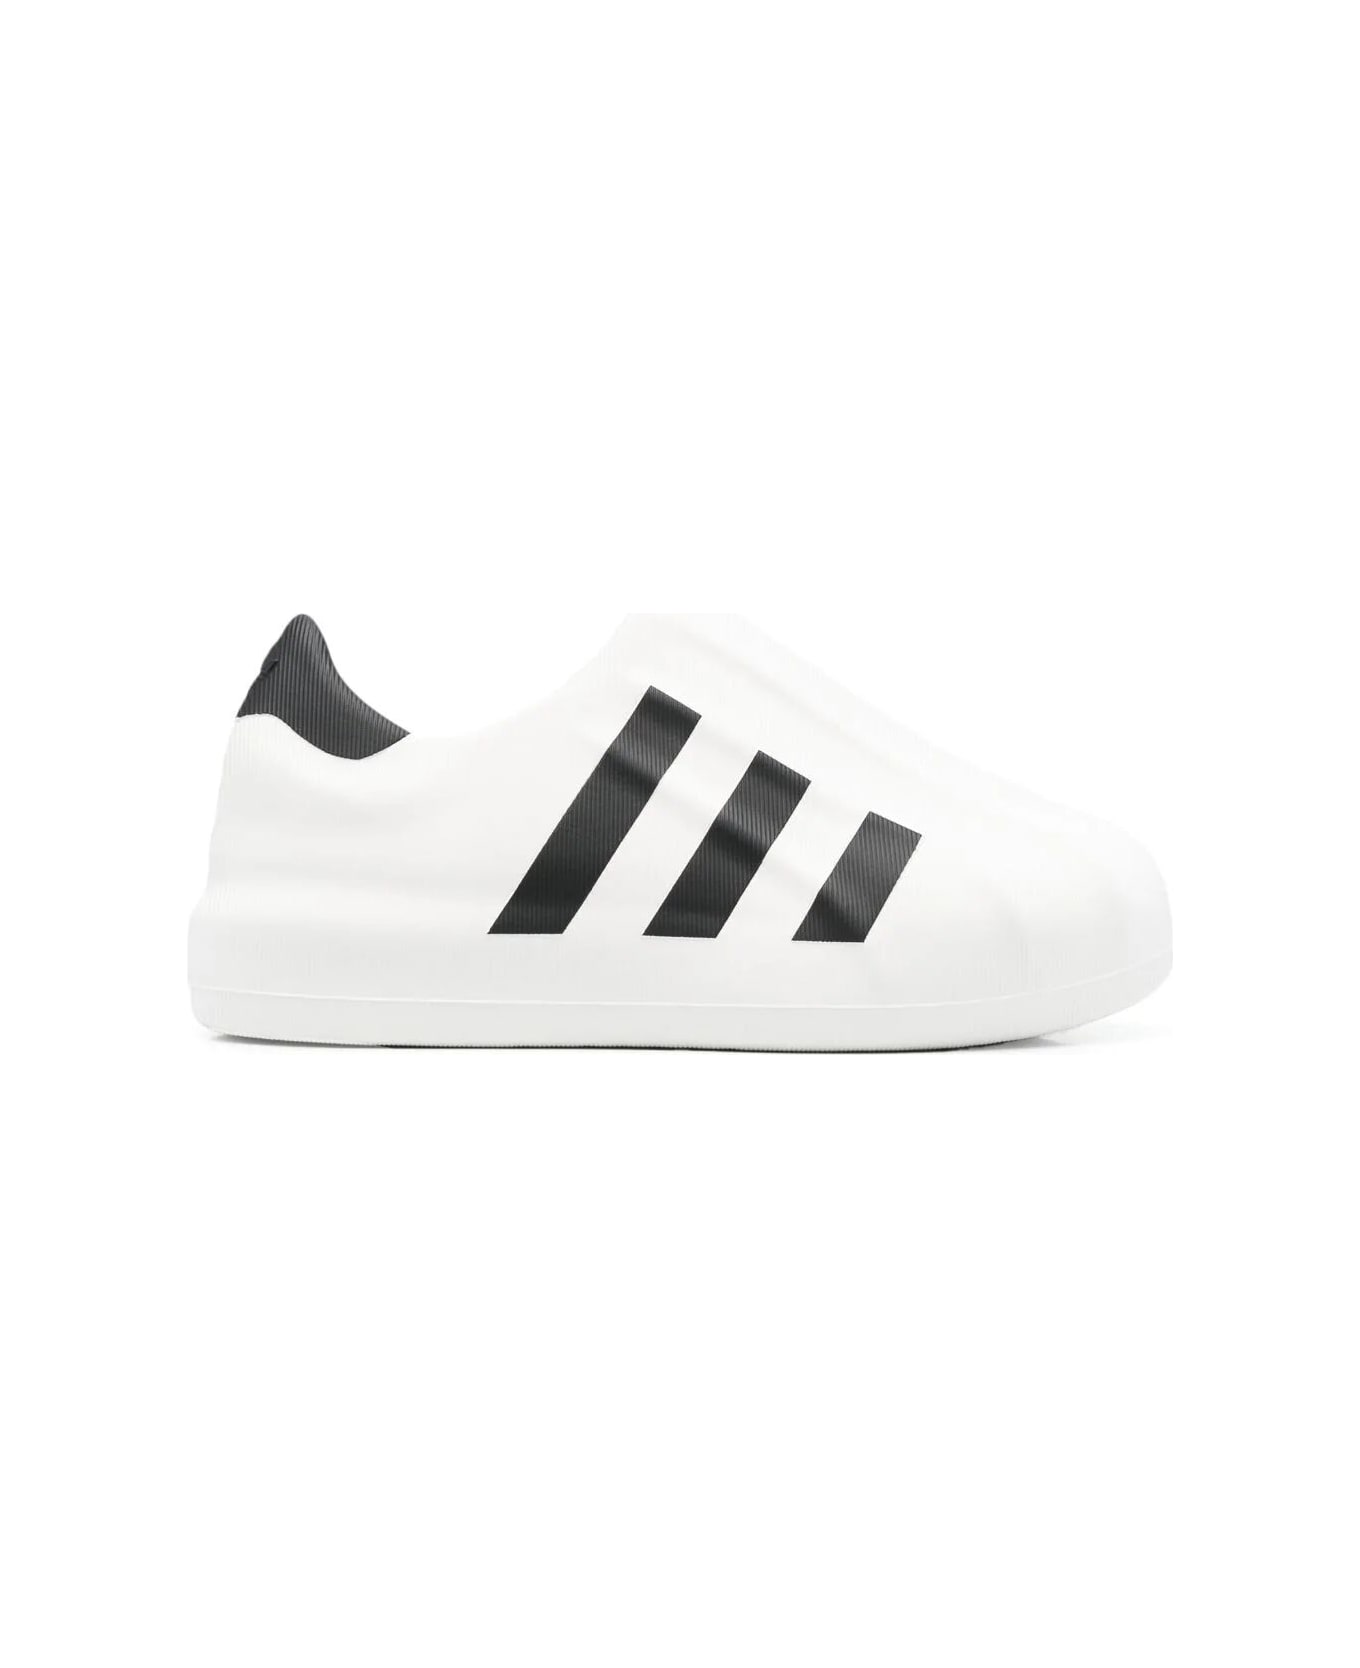 Adidas Adifom Superstar Sneakers - Cwhite Cblack Cblack スニーカー